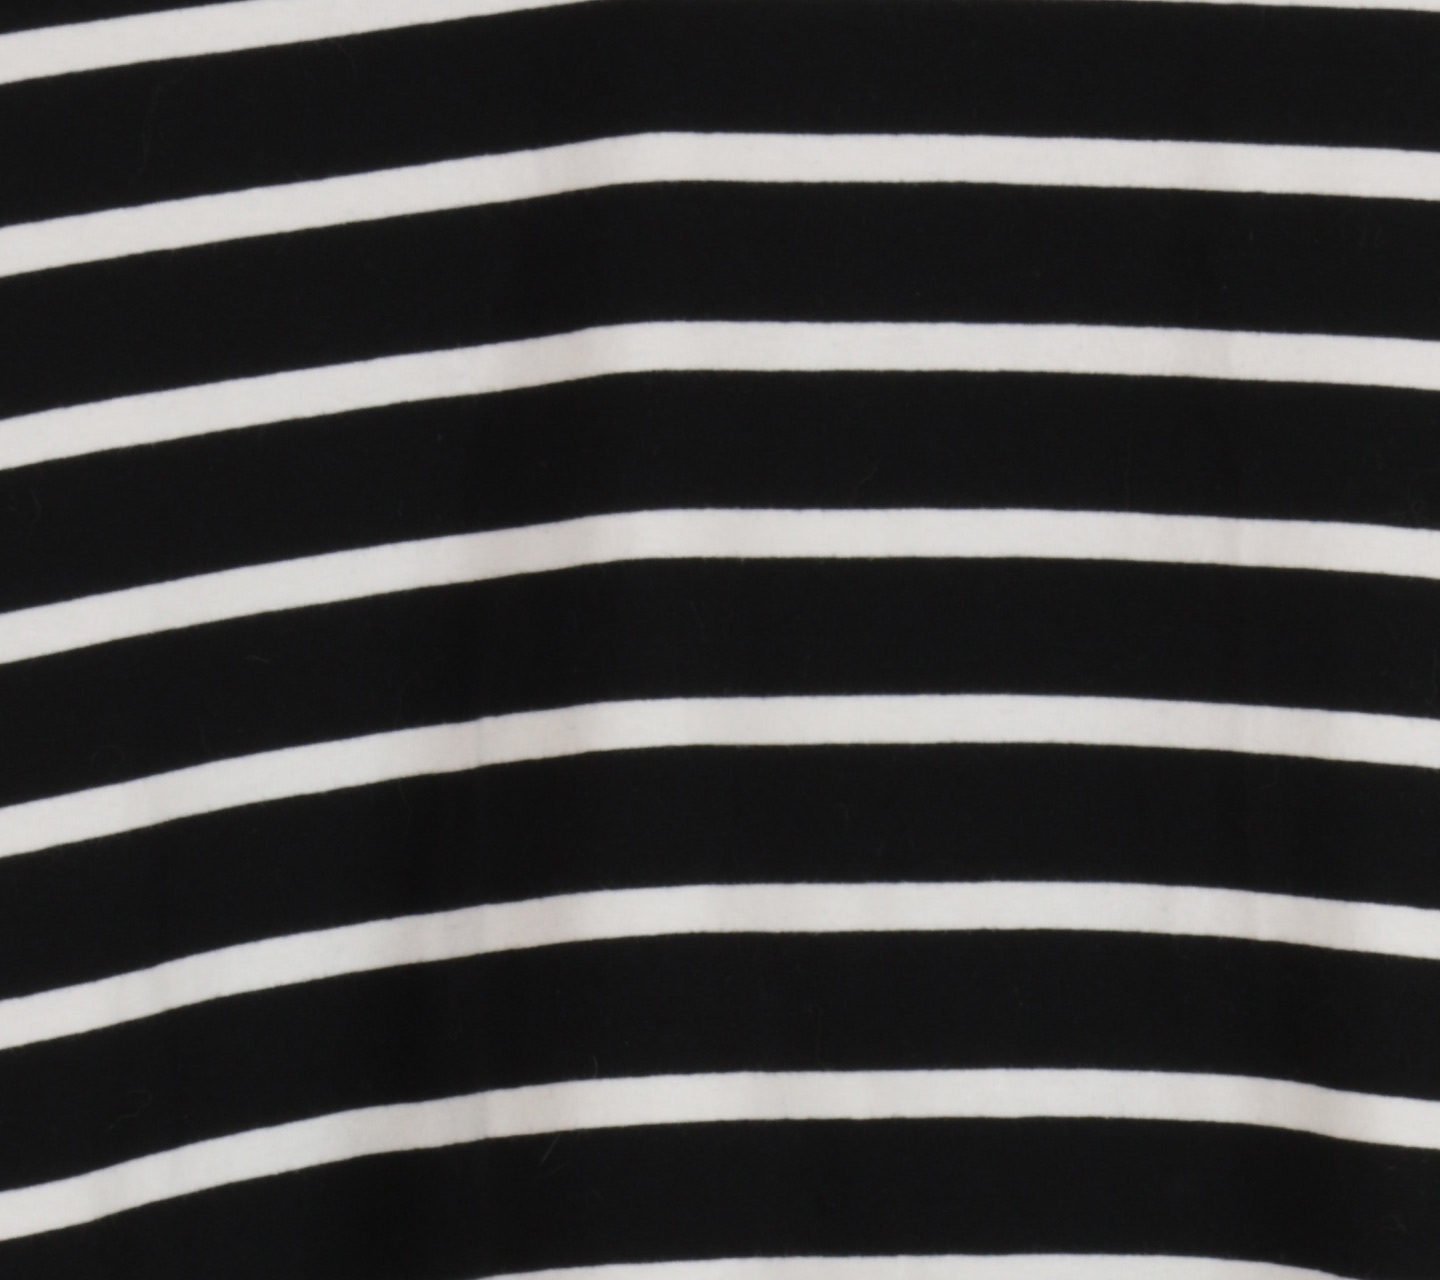 Black and White Stripes T-Shirt